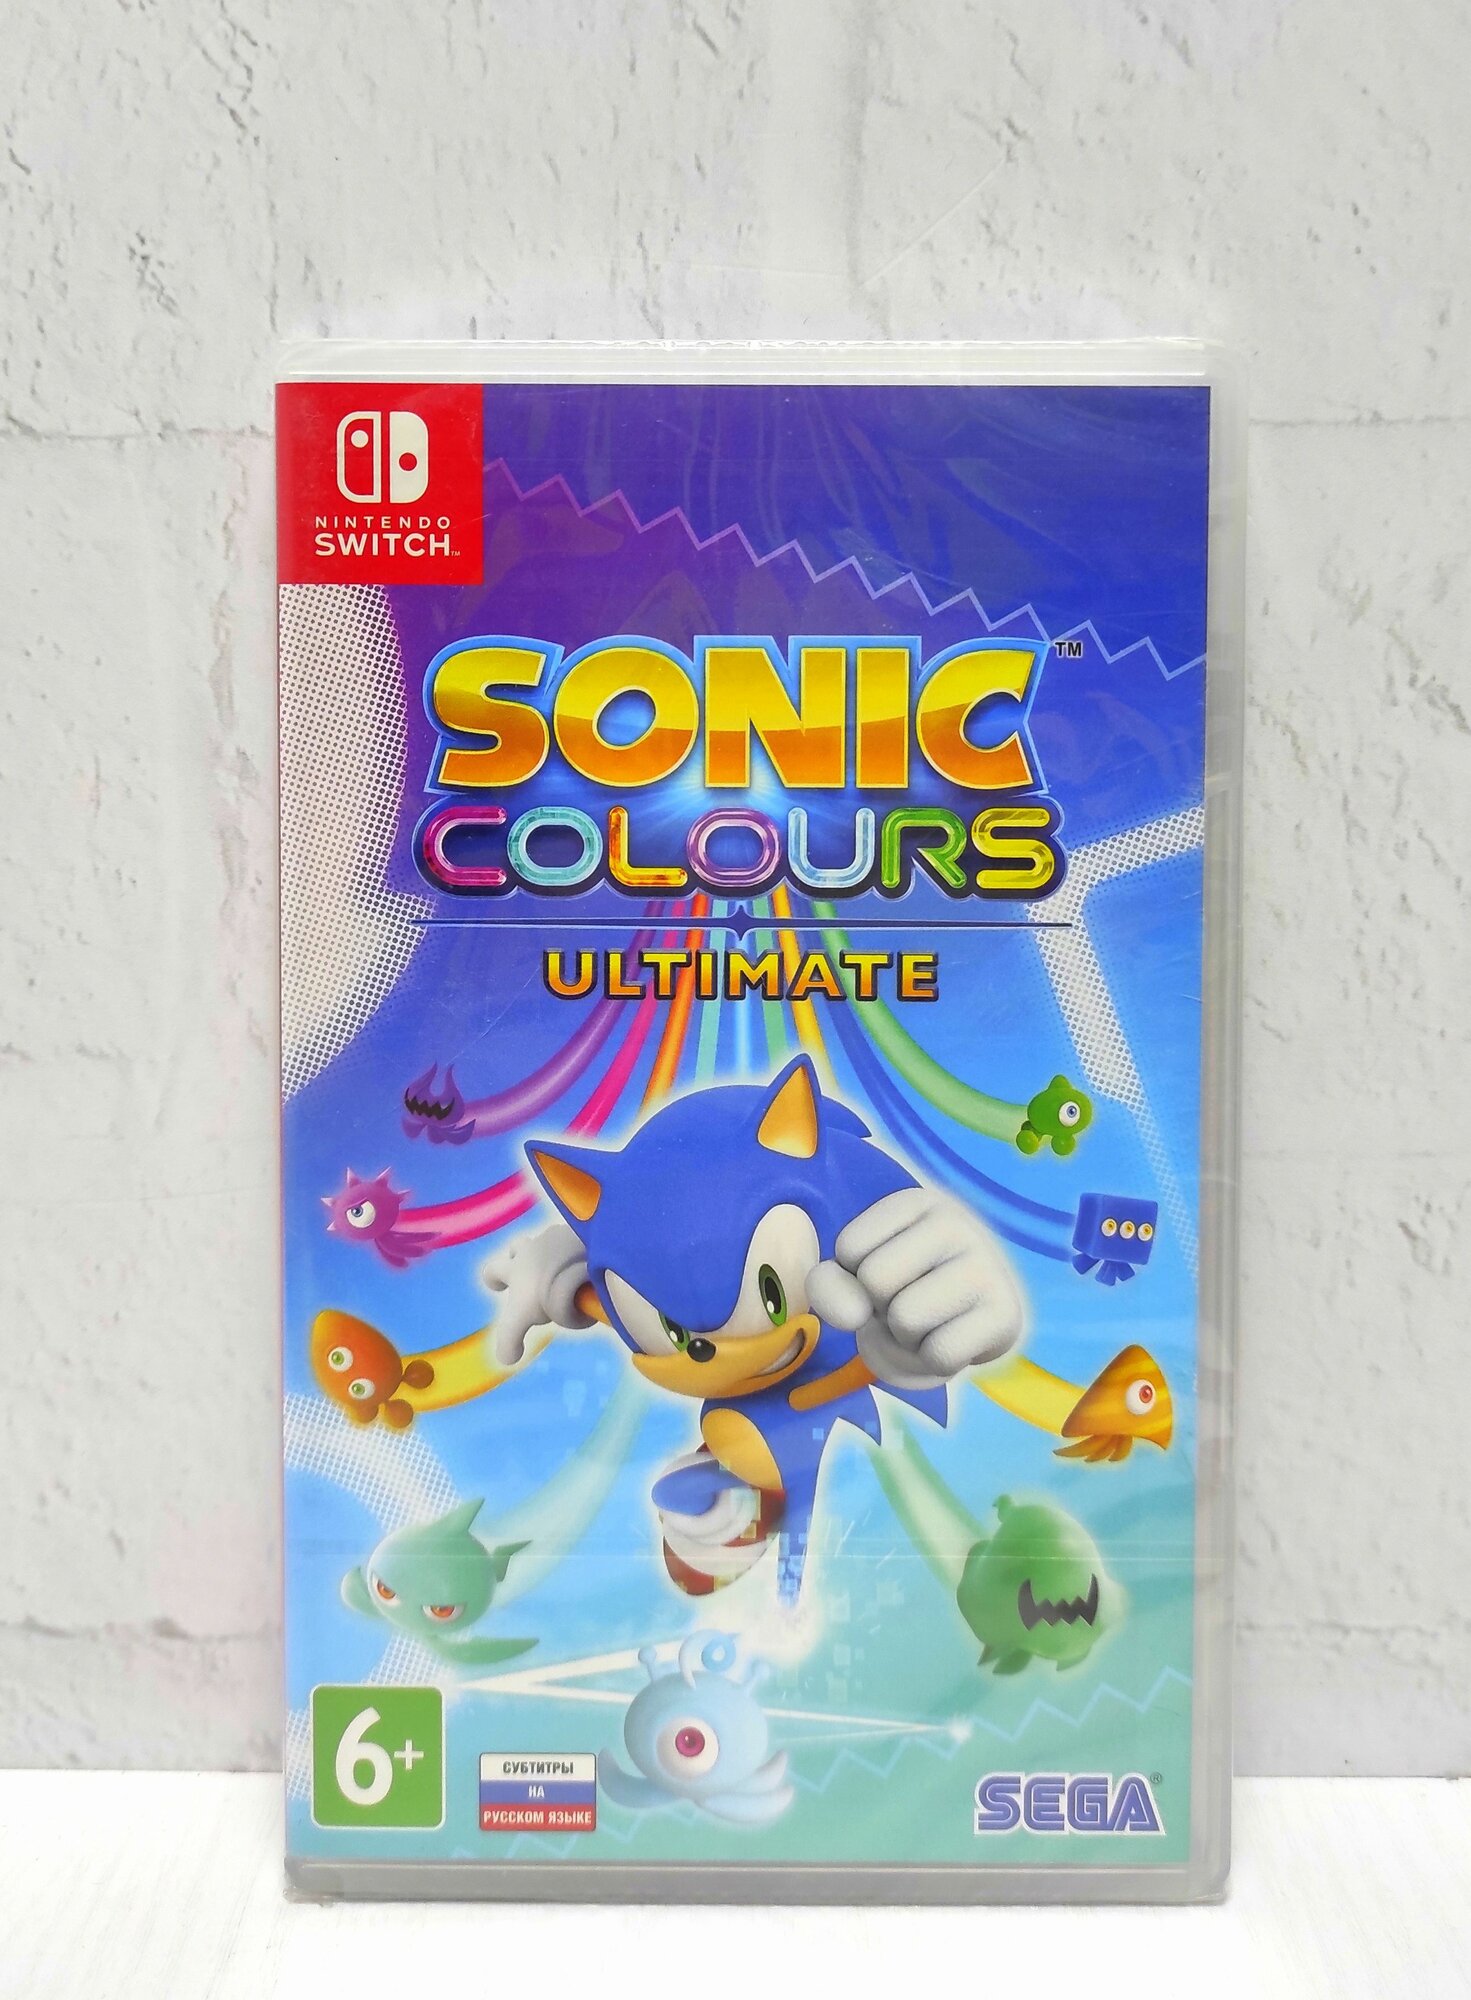 Sonic Colours Ultimate Русские Субтитры Видеоигра на картридже Nintendo Switch